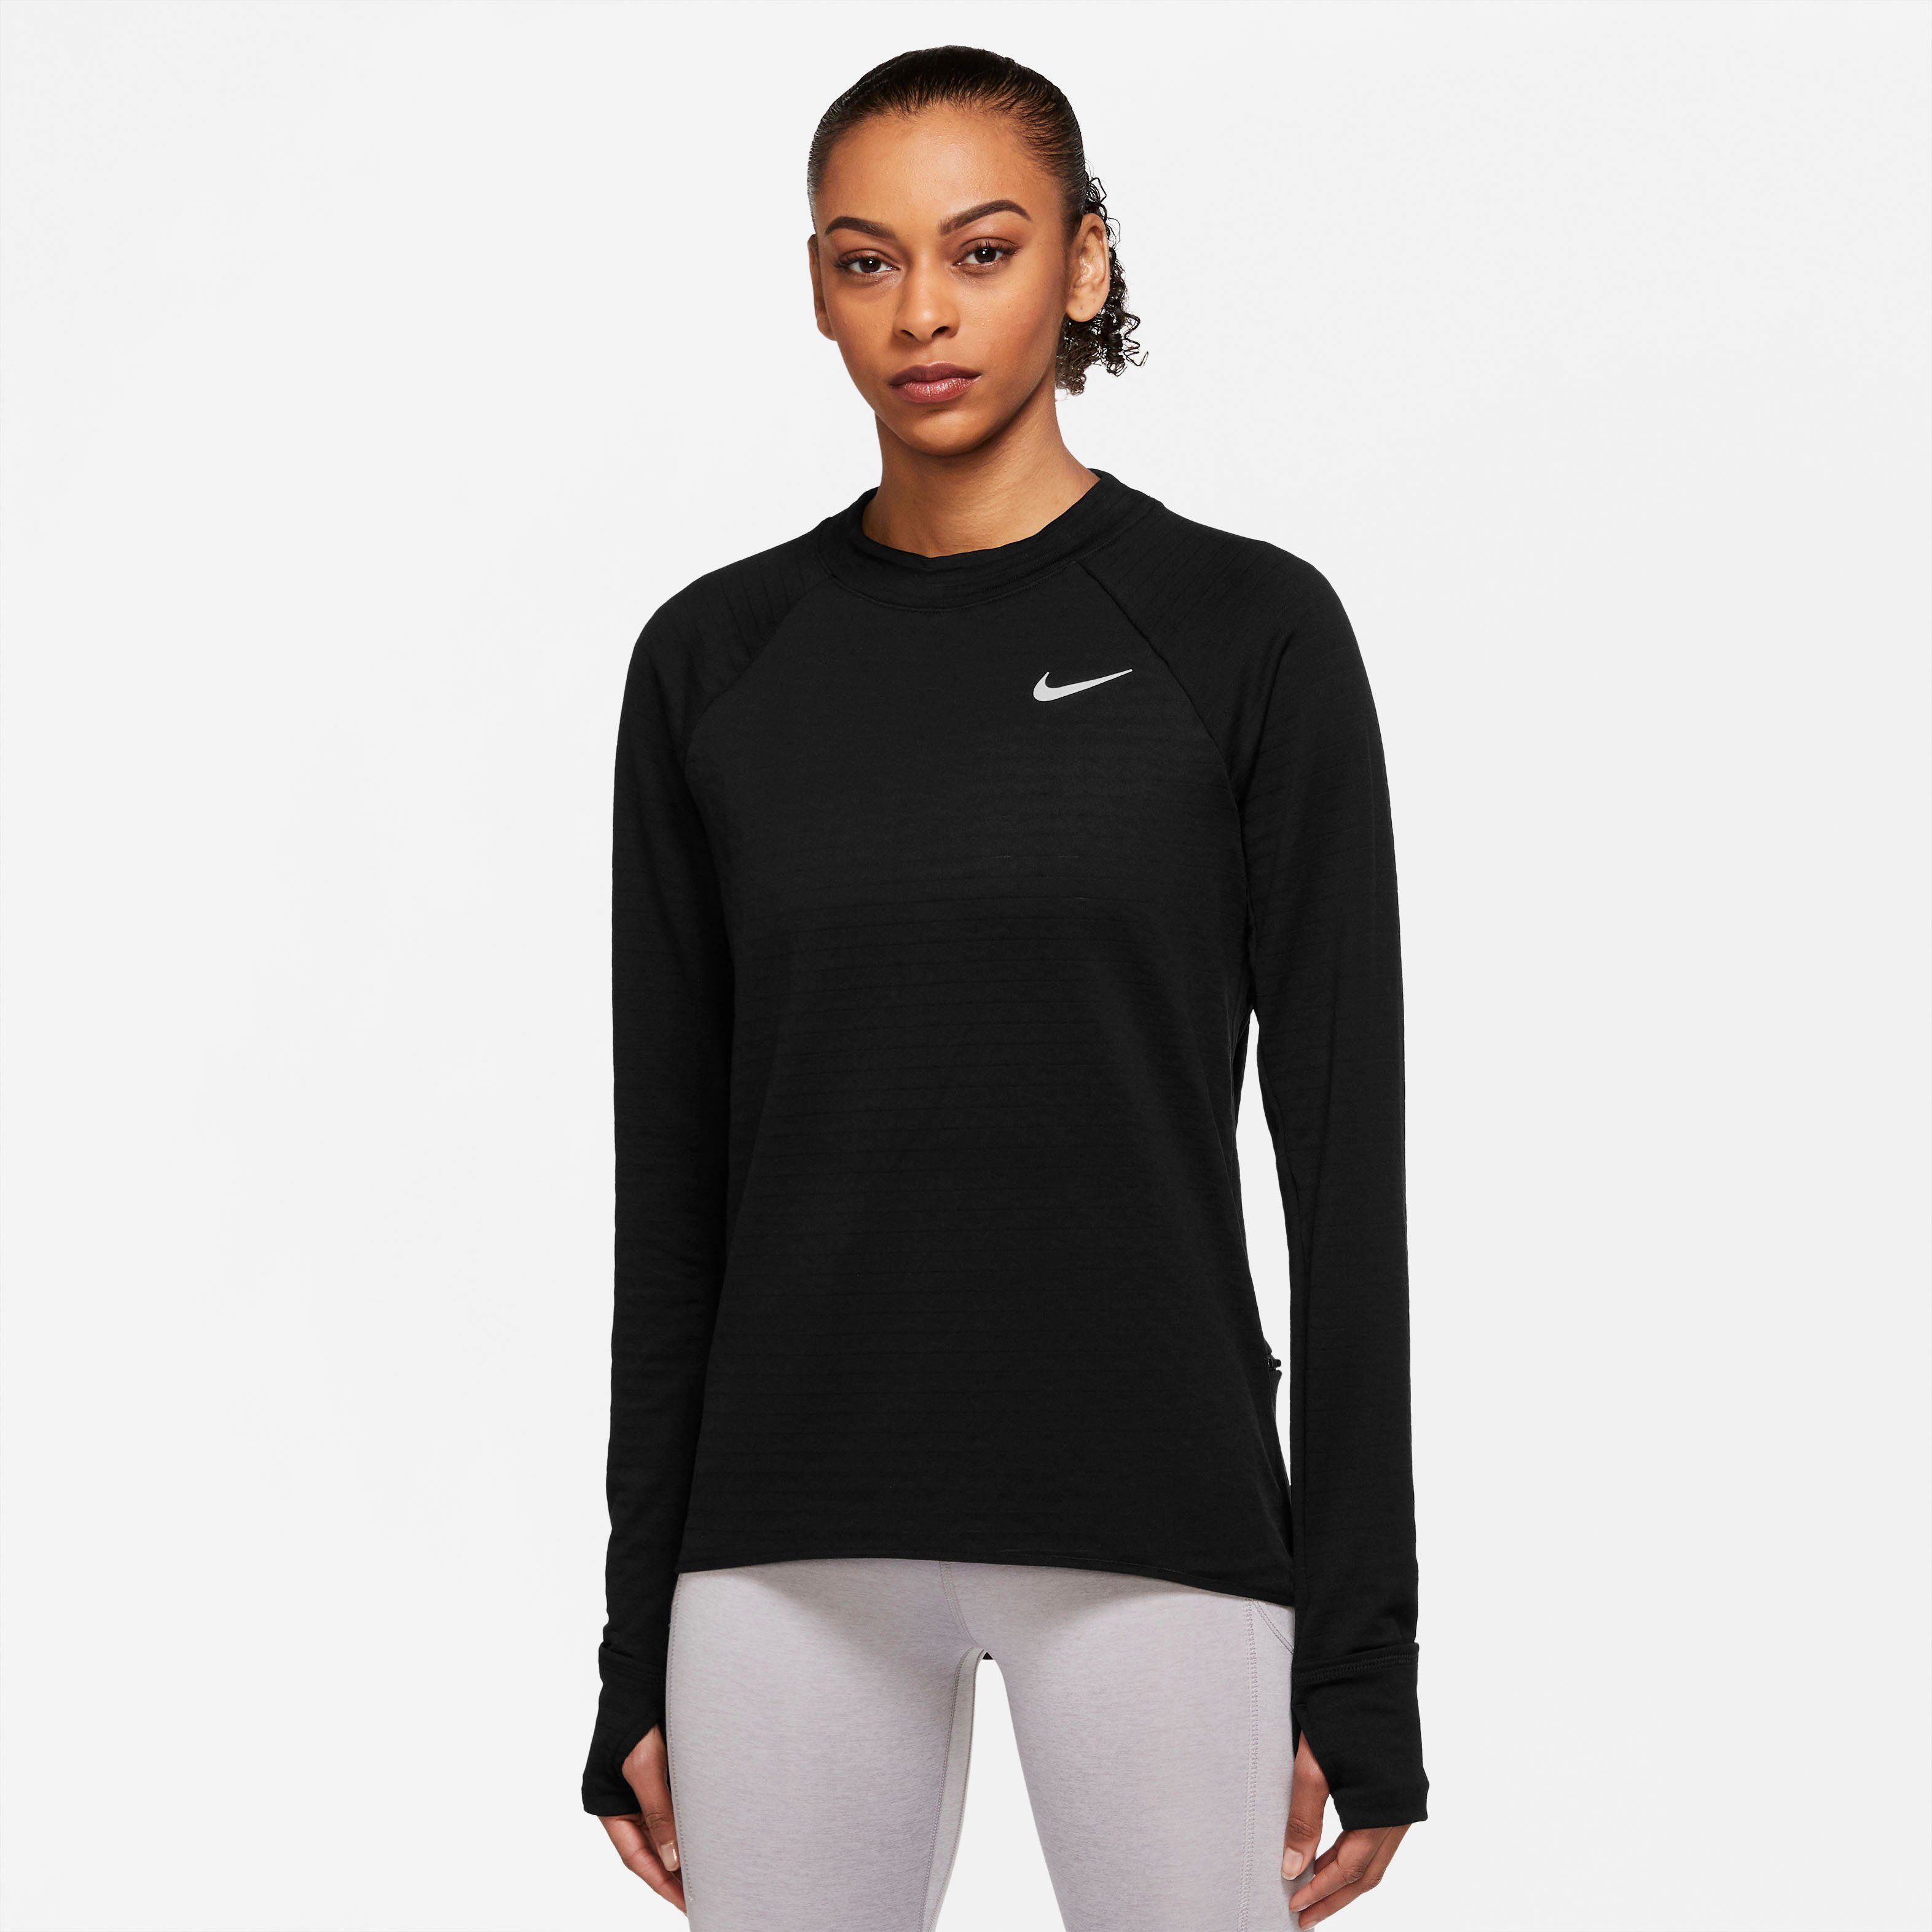 Nike Langarmshirt » Longsleeves online kaufen | OTTO